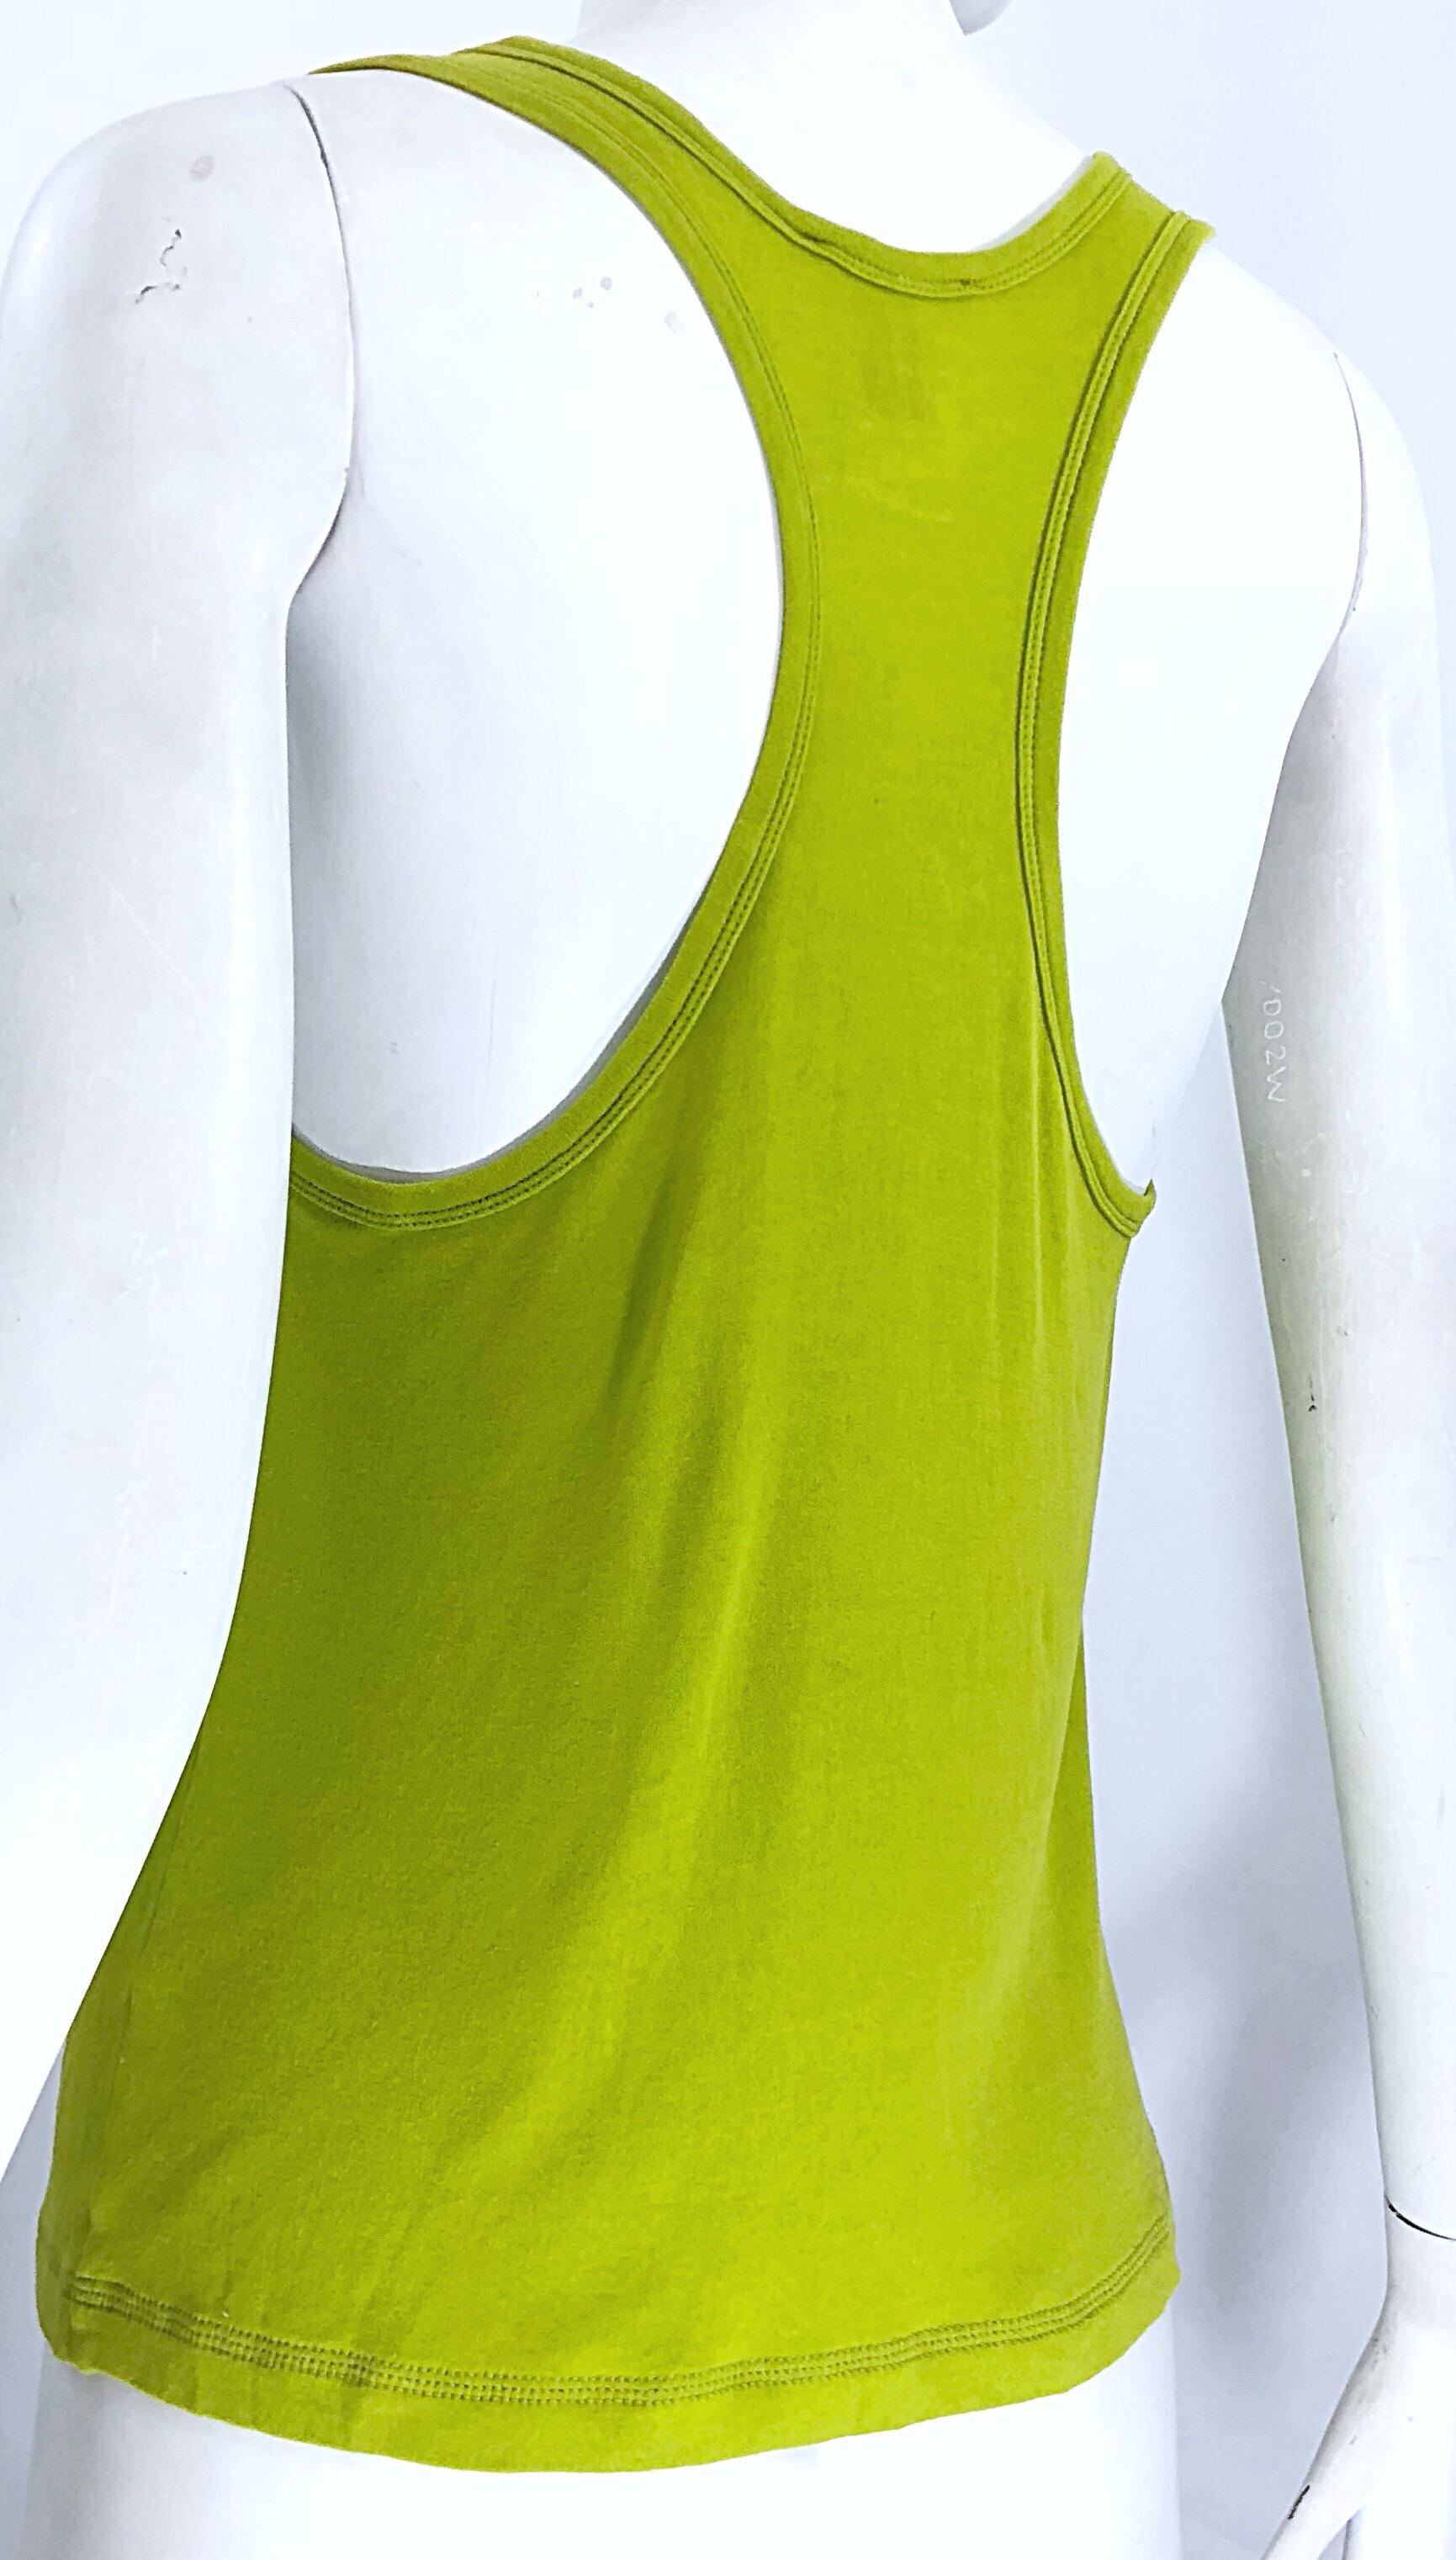 New Chloe Fall 2007 Mushy Peas Chartreuse Racerback Sleeveless Tank Top Shirt For Sale 1